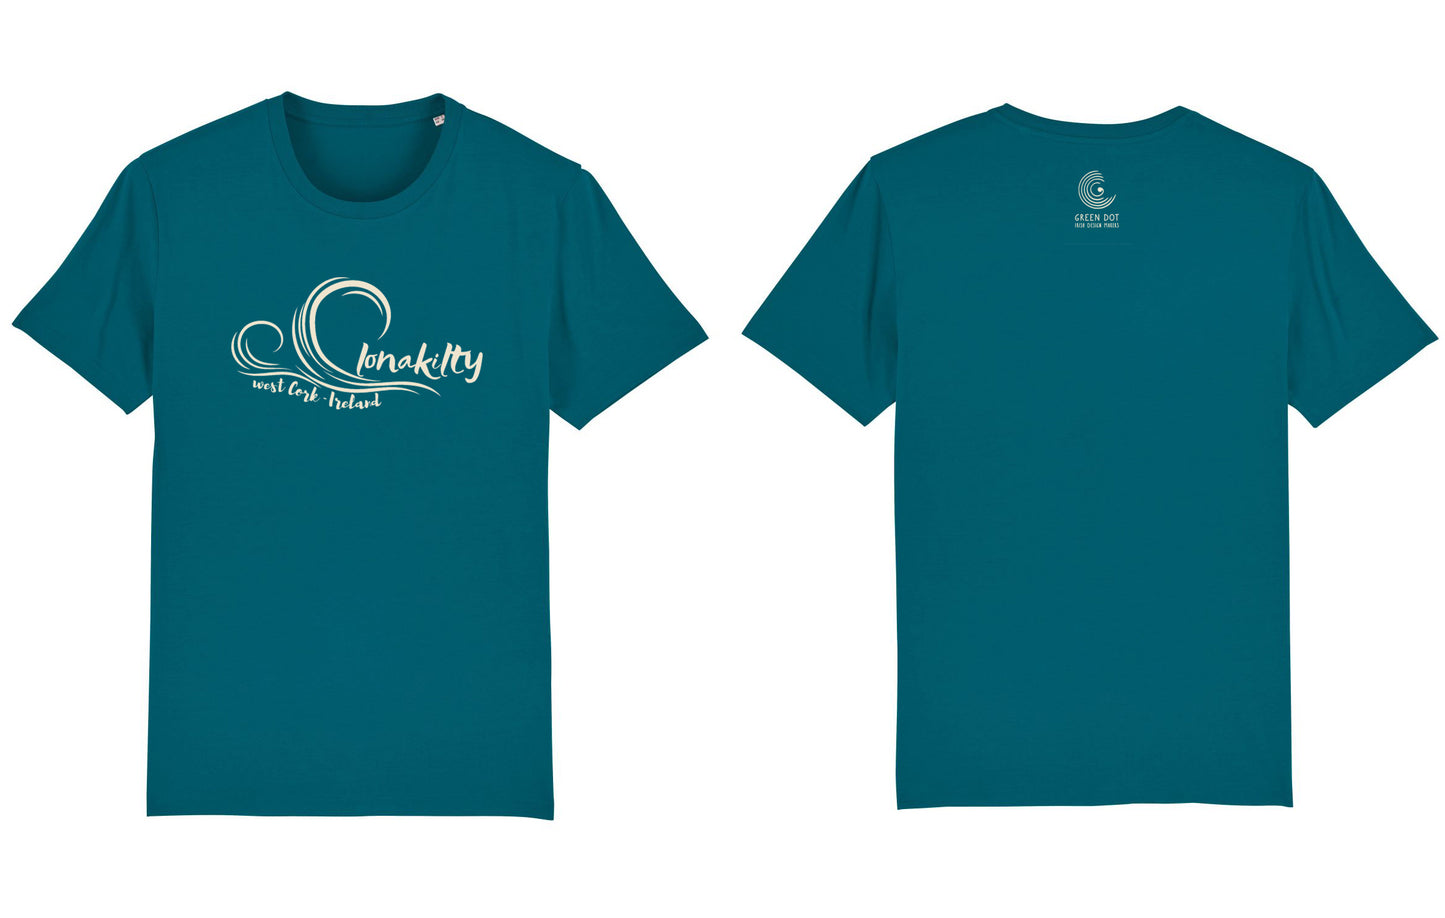 Clonakilty wave T-shirt